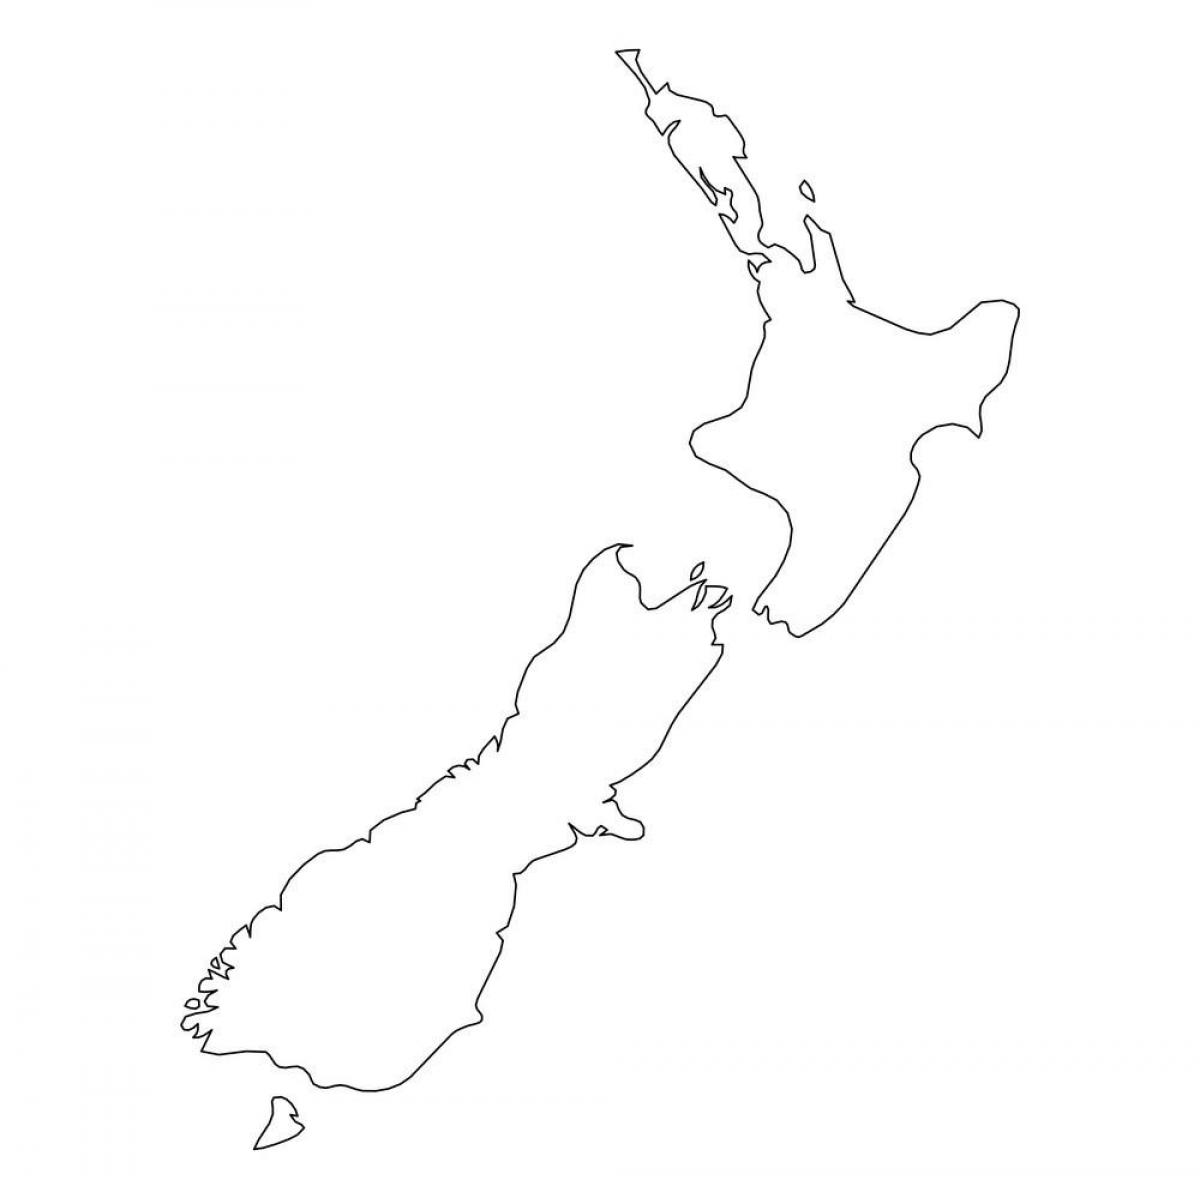 New Zealand contours map